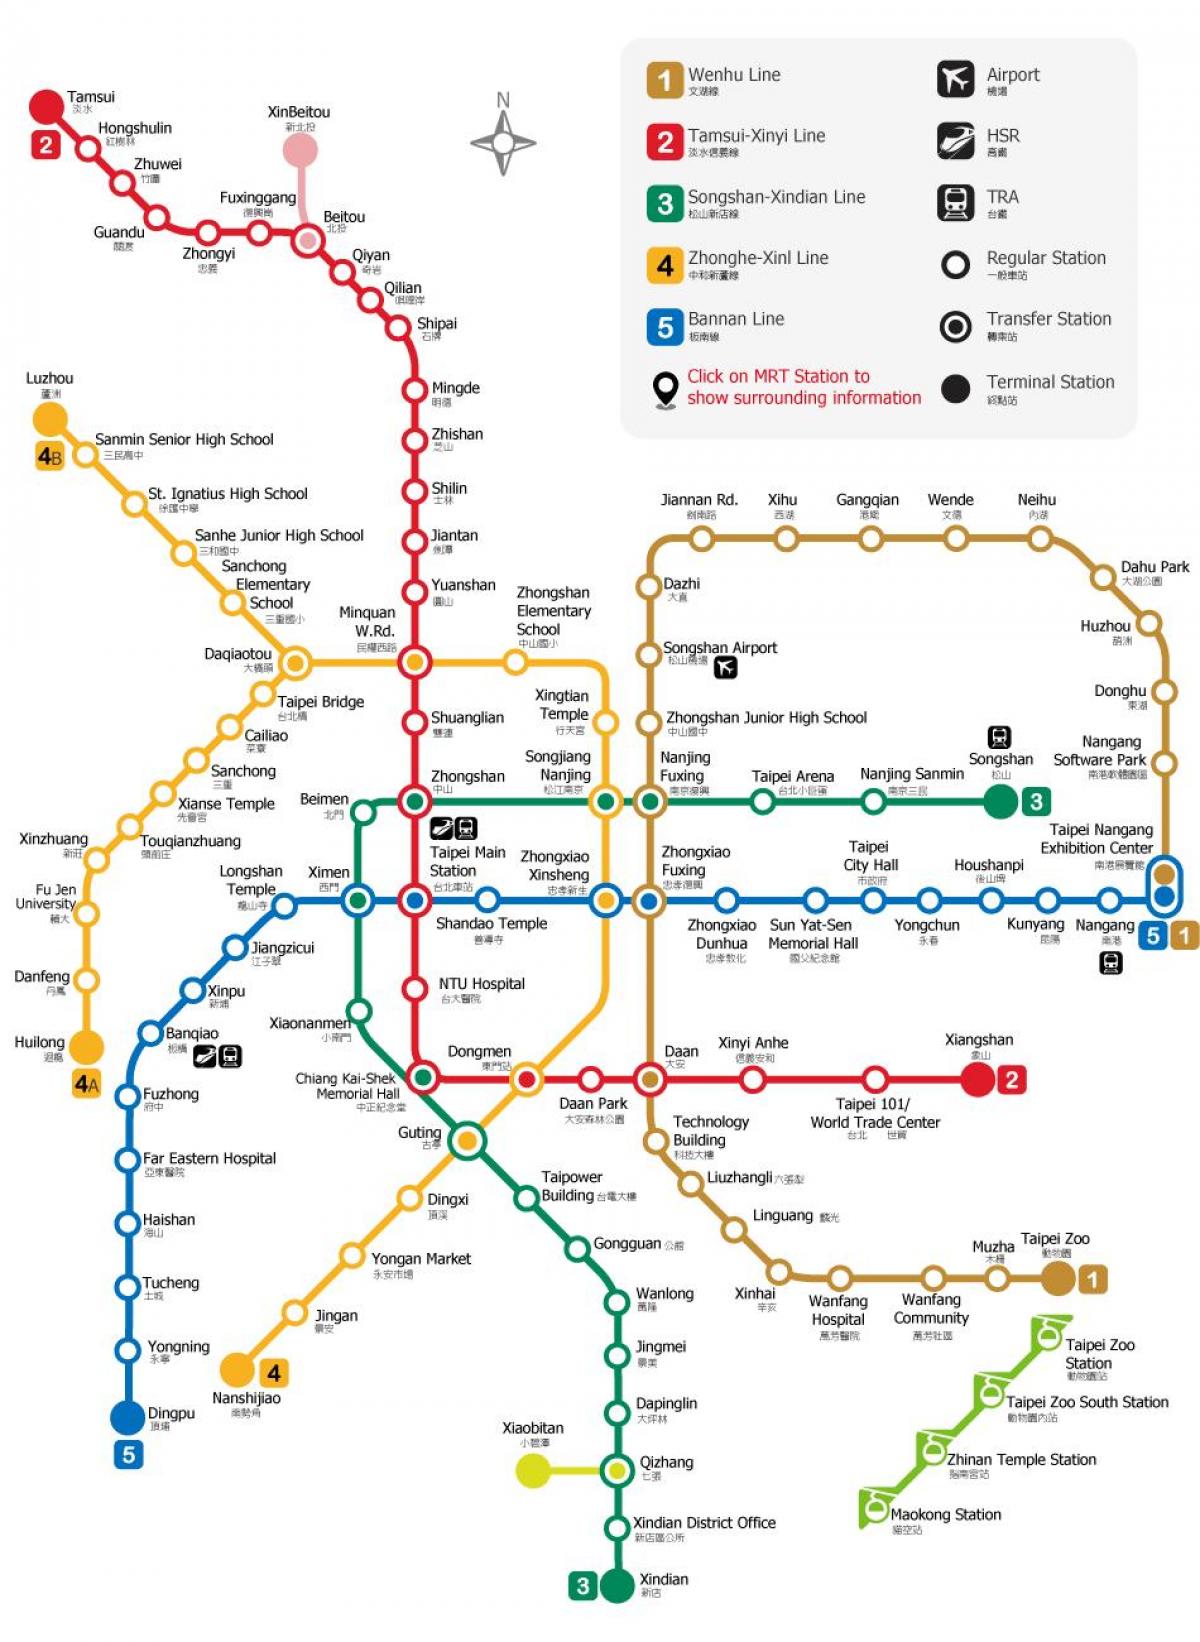 Taipei railway station mapě